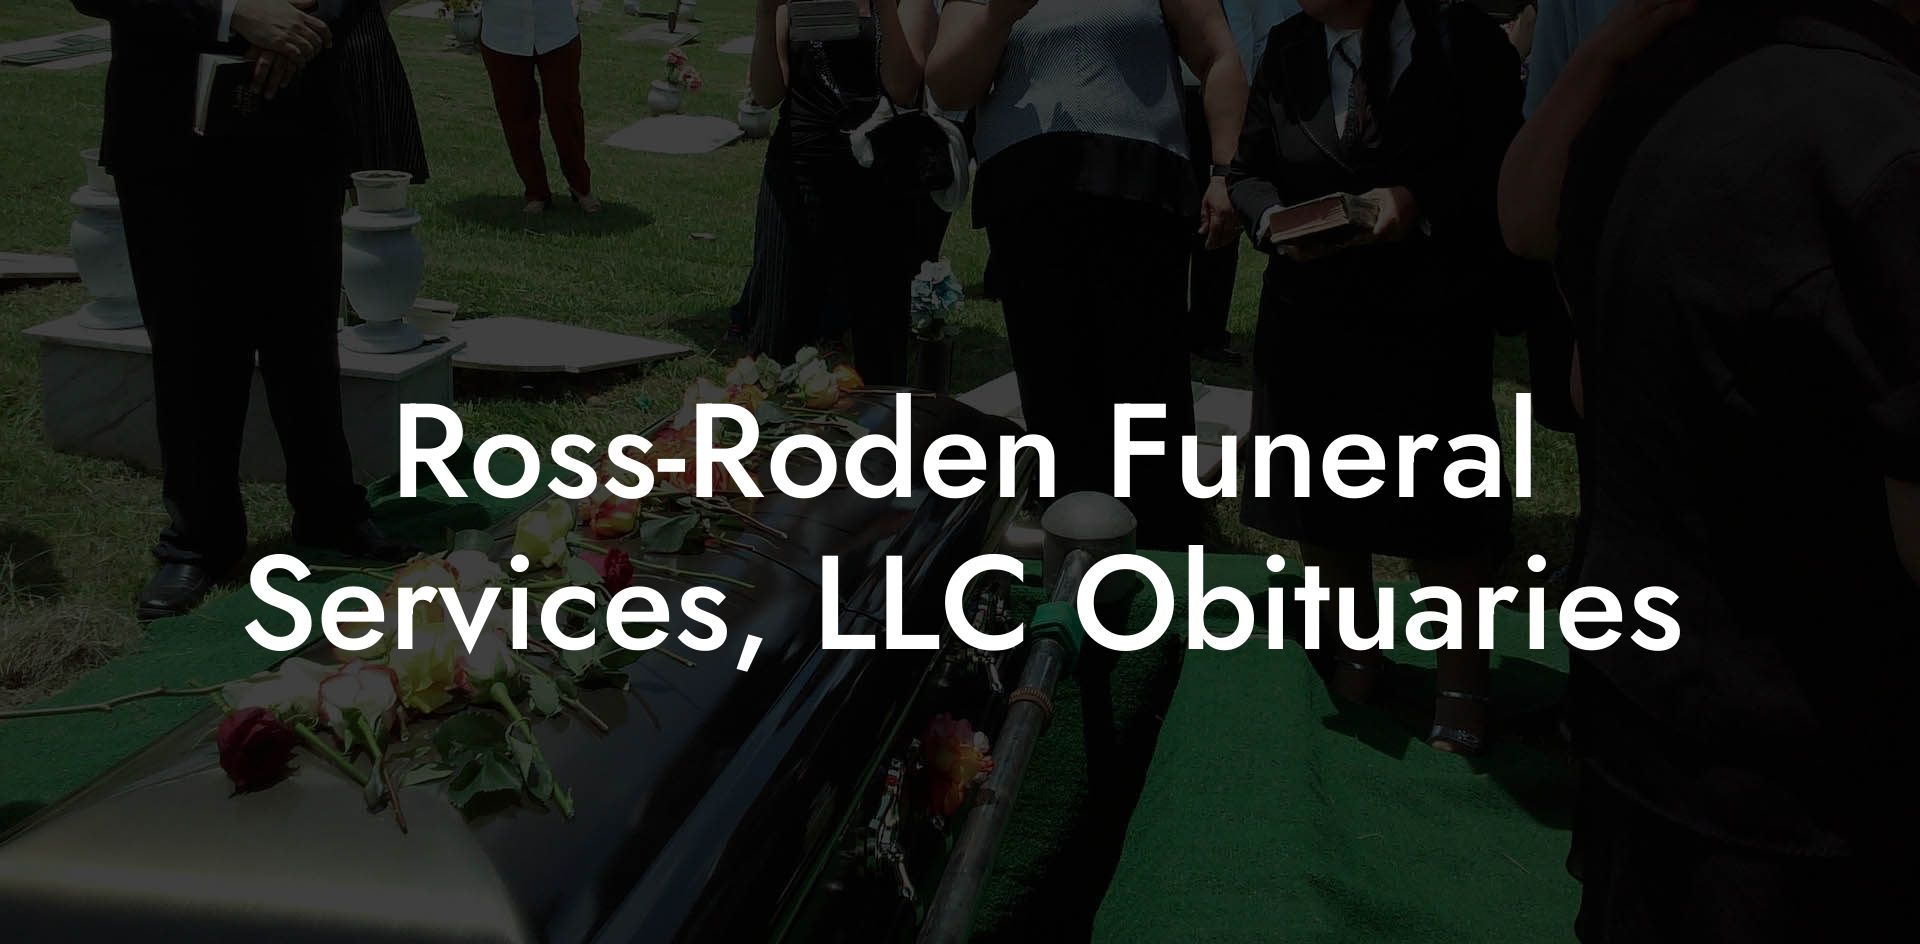 Ross-Roden Funeral Services, LLC Obituaries